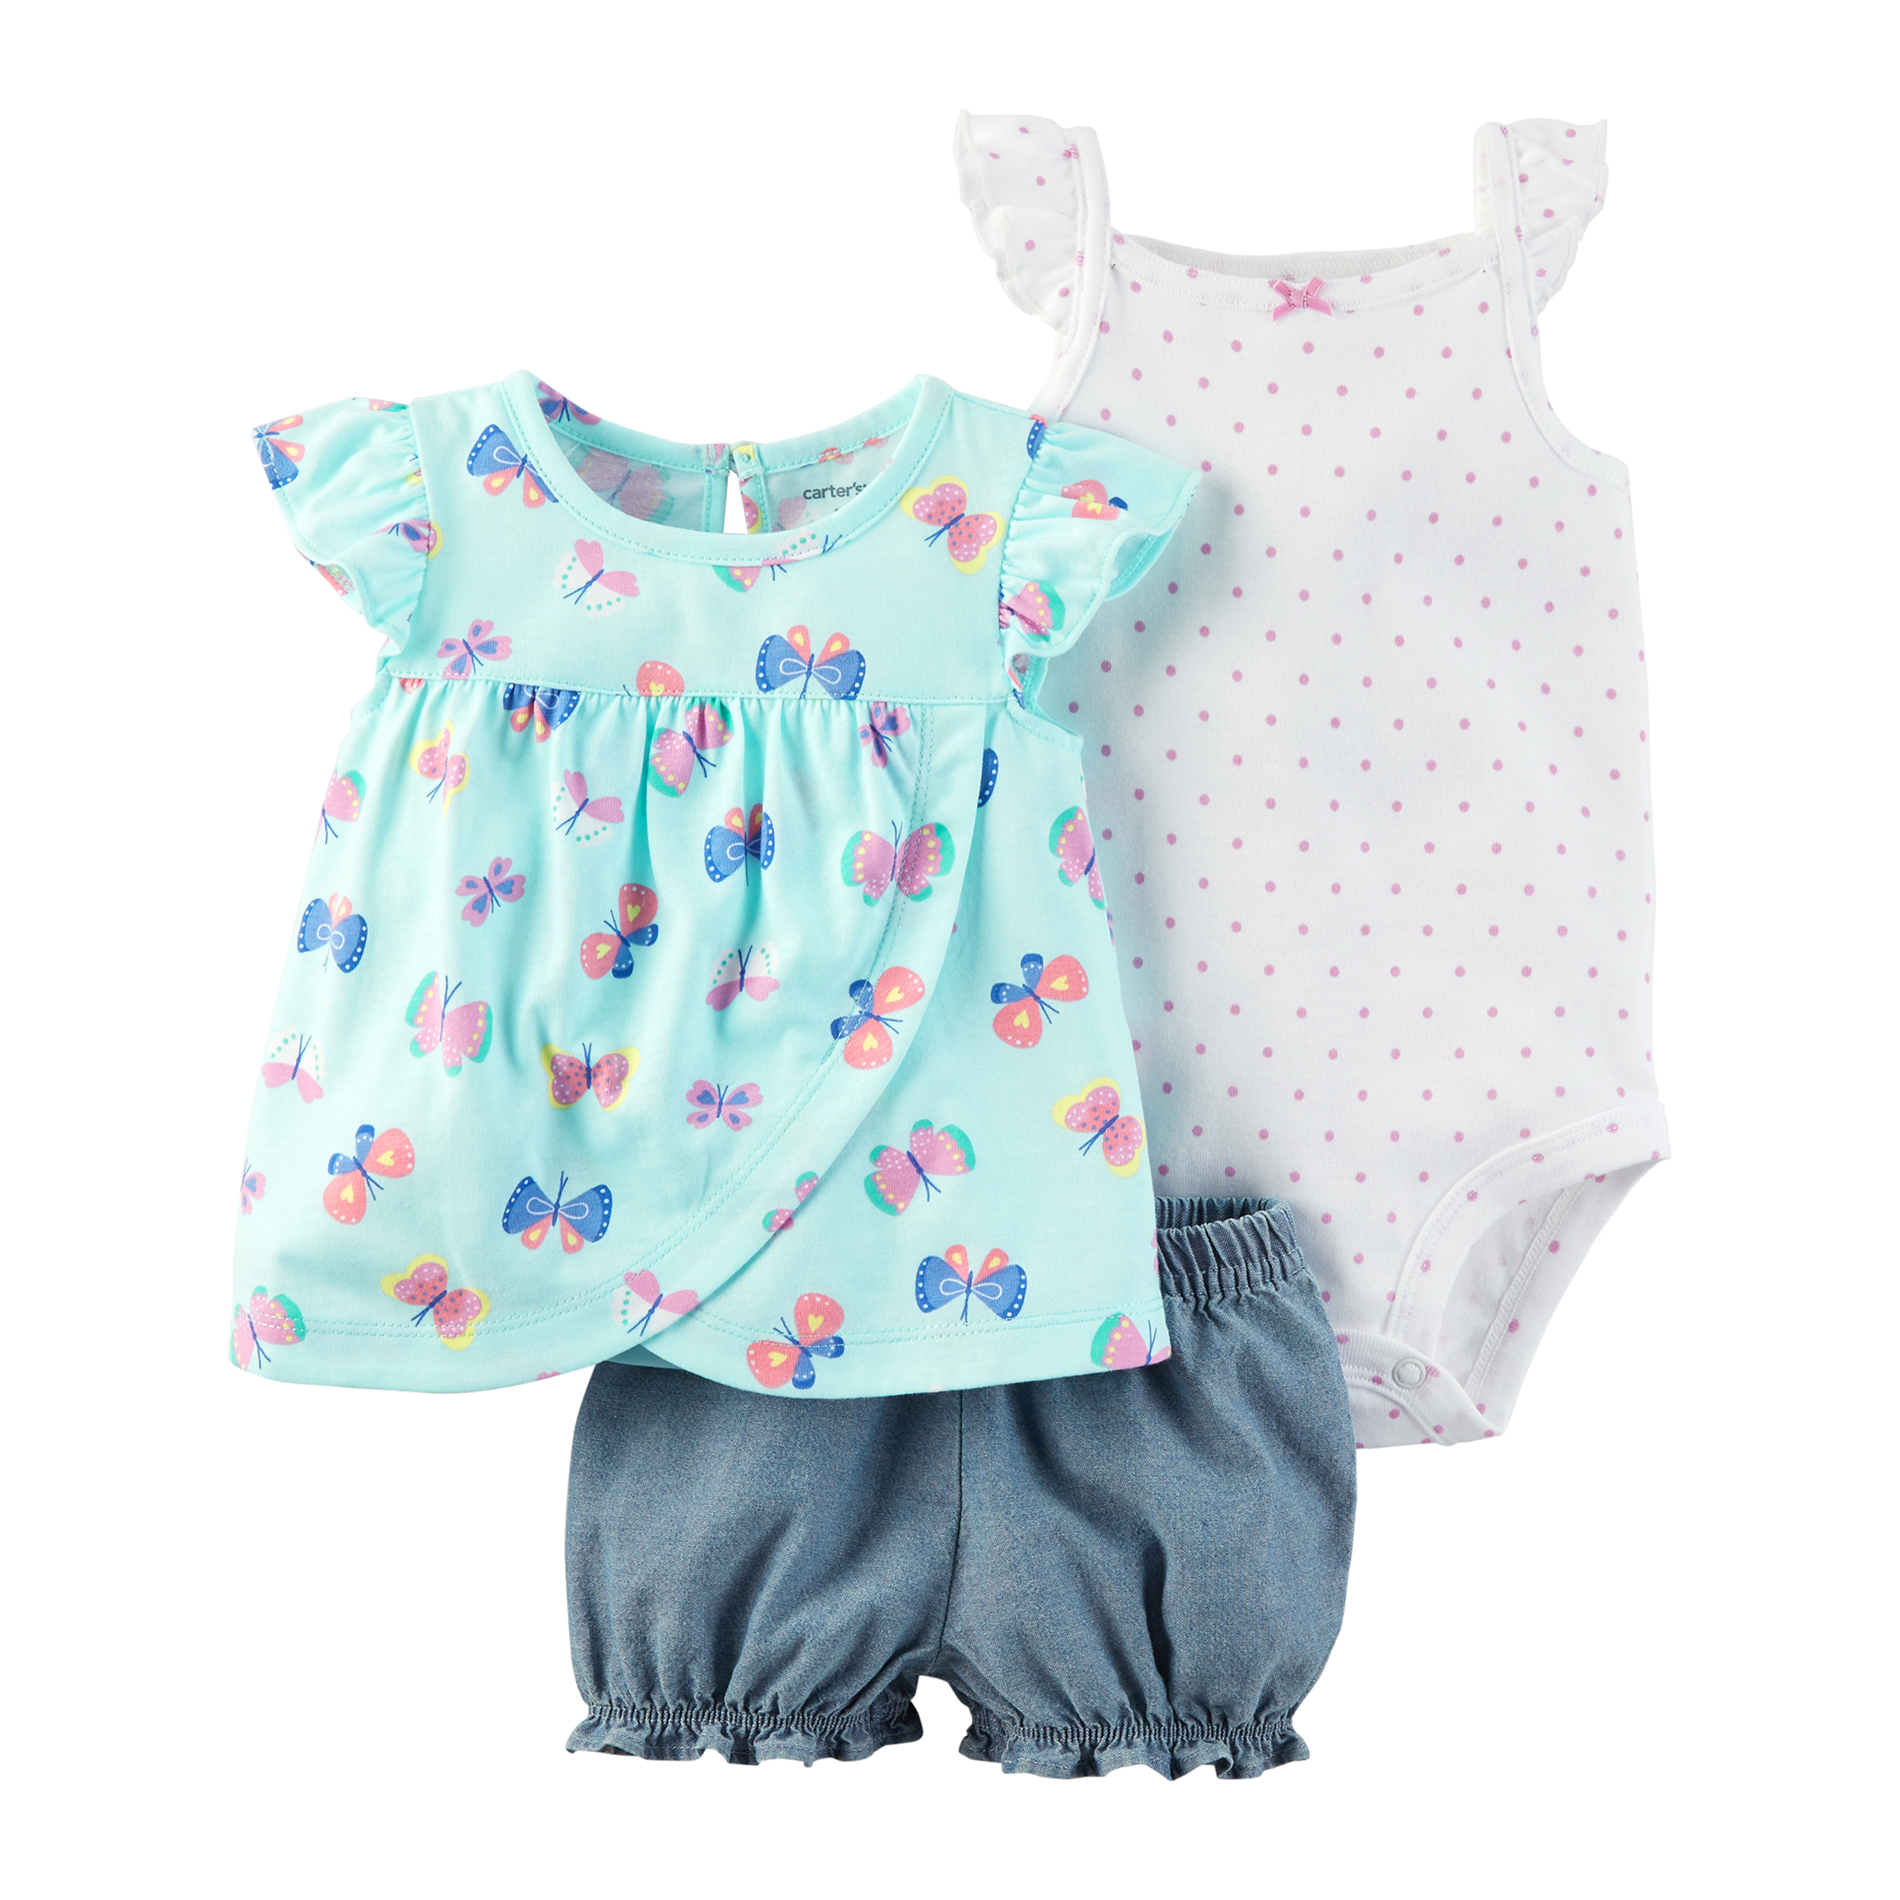 Carter's Infant Girls&#8217; Top, Bodysuit & Diaper Cover Set - Butterfly